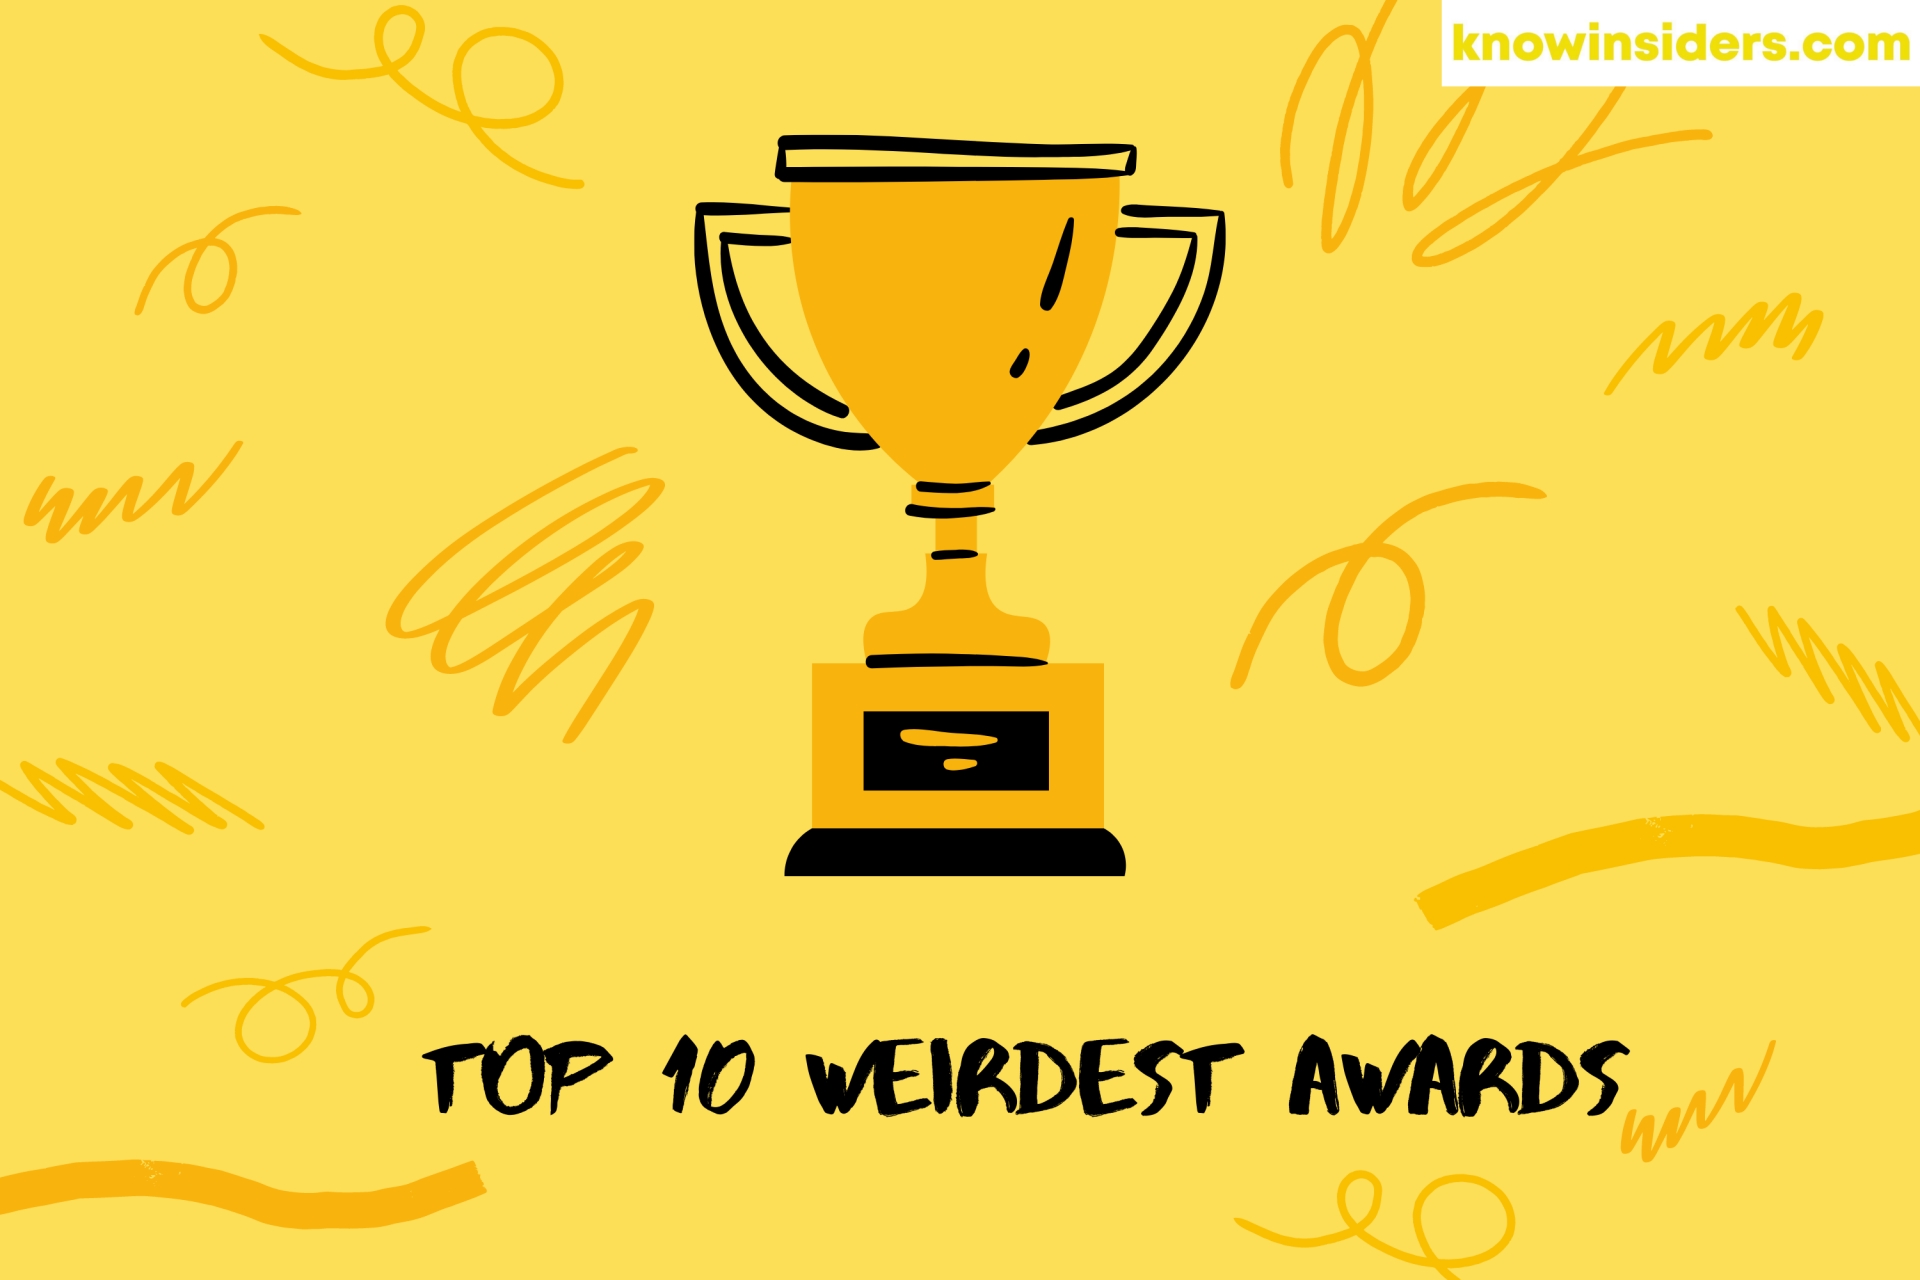 Top 10 Weirdest Awards In The World